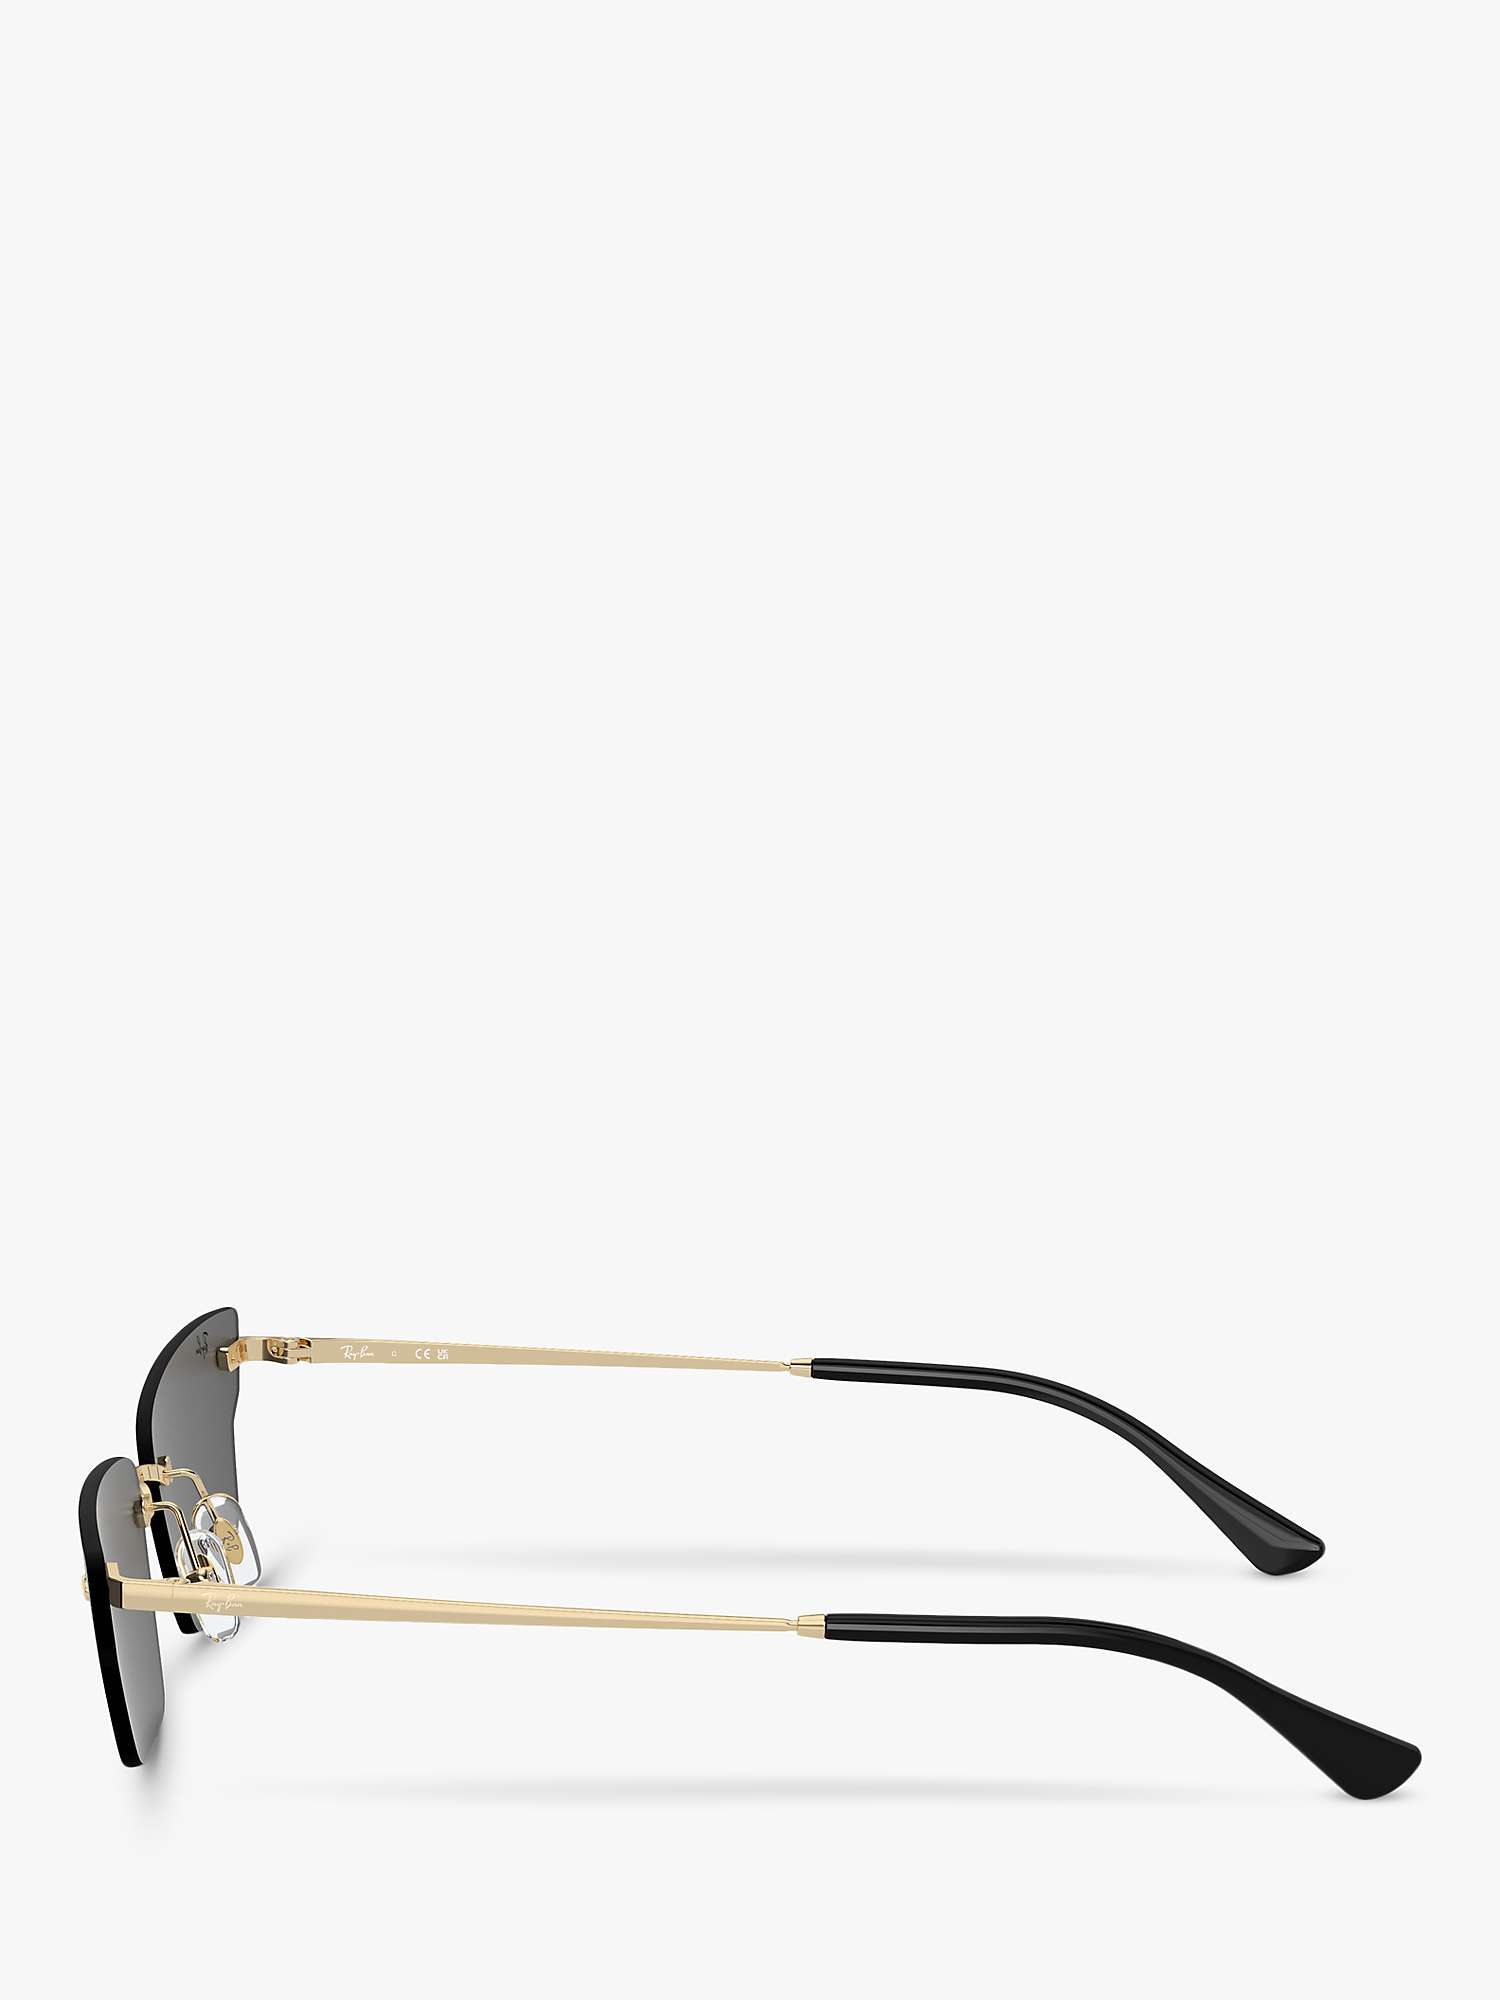 Buy Ray-Ban RB3731 Unisex Rectangular Sunglasses, Light Gold/Black Online at johnlewis.com